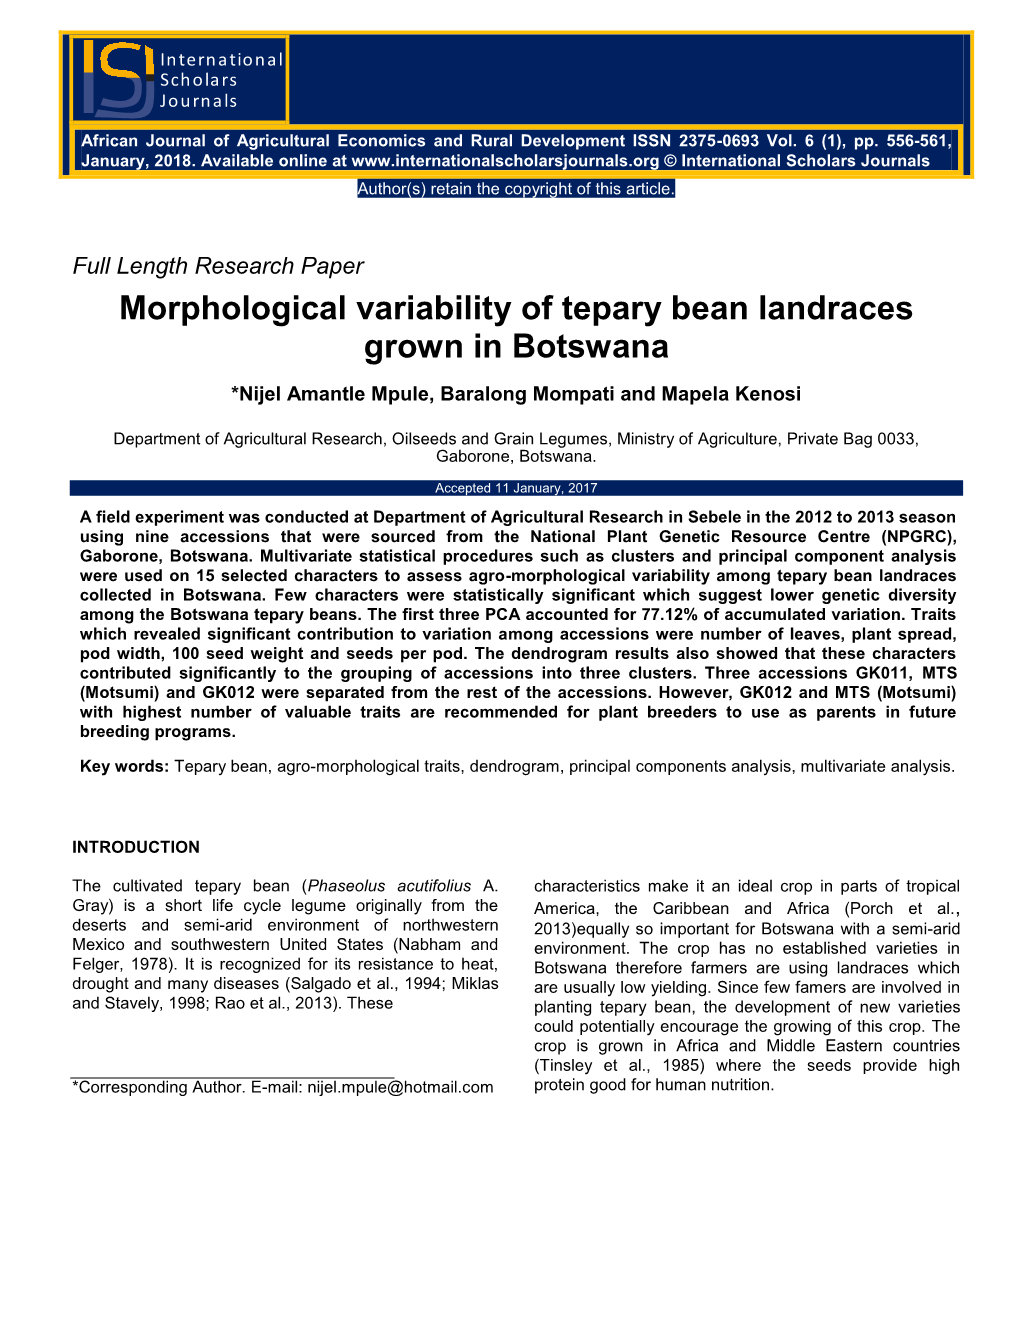 Morphological Variability of Tepary Bean Landraces Grown in Botswana